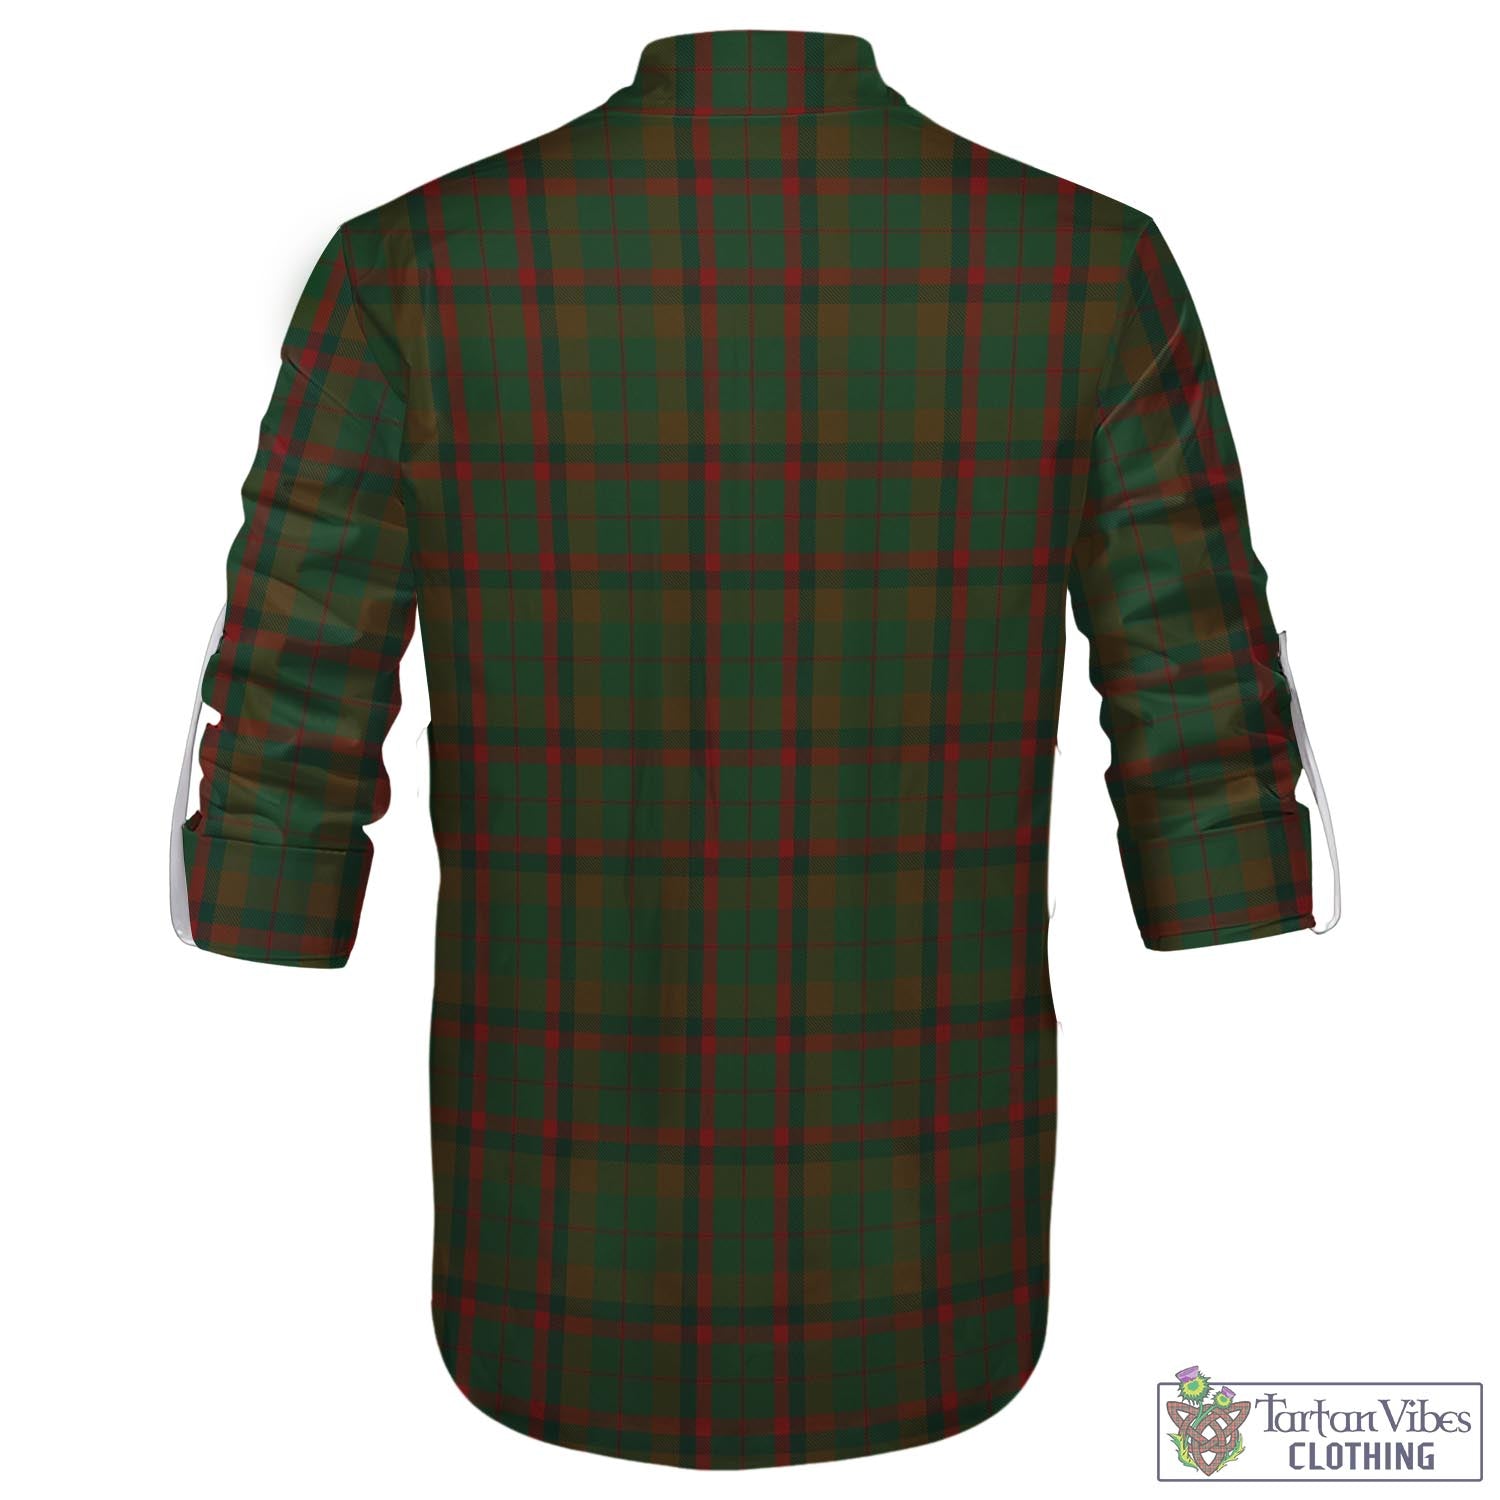 Tartan Vibes Clothing Macnaughton Hunting Tartan Men's Scottish Traditional Jacobite Ghillie Kilt Shirt with Family Crest